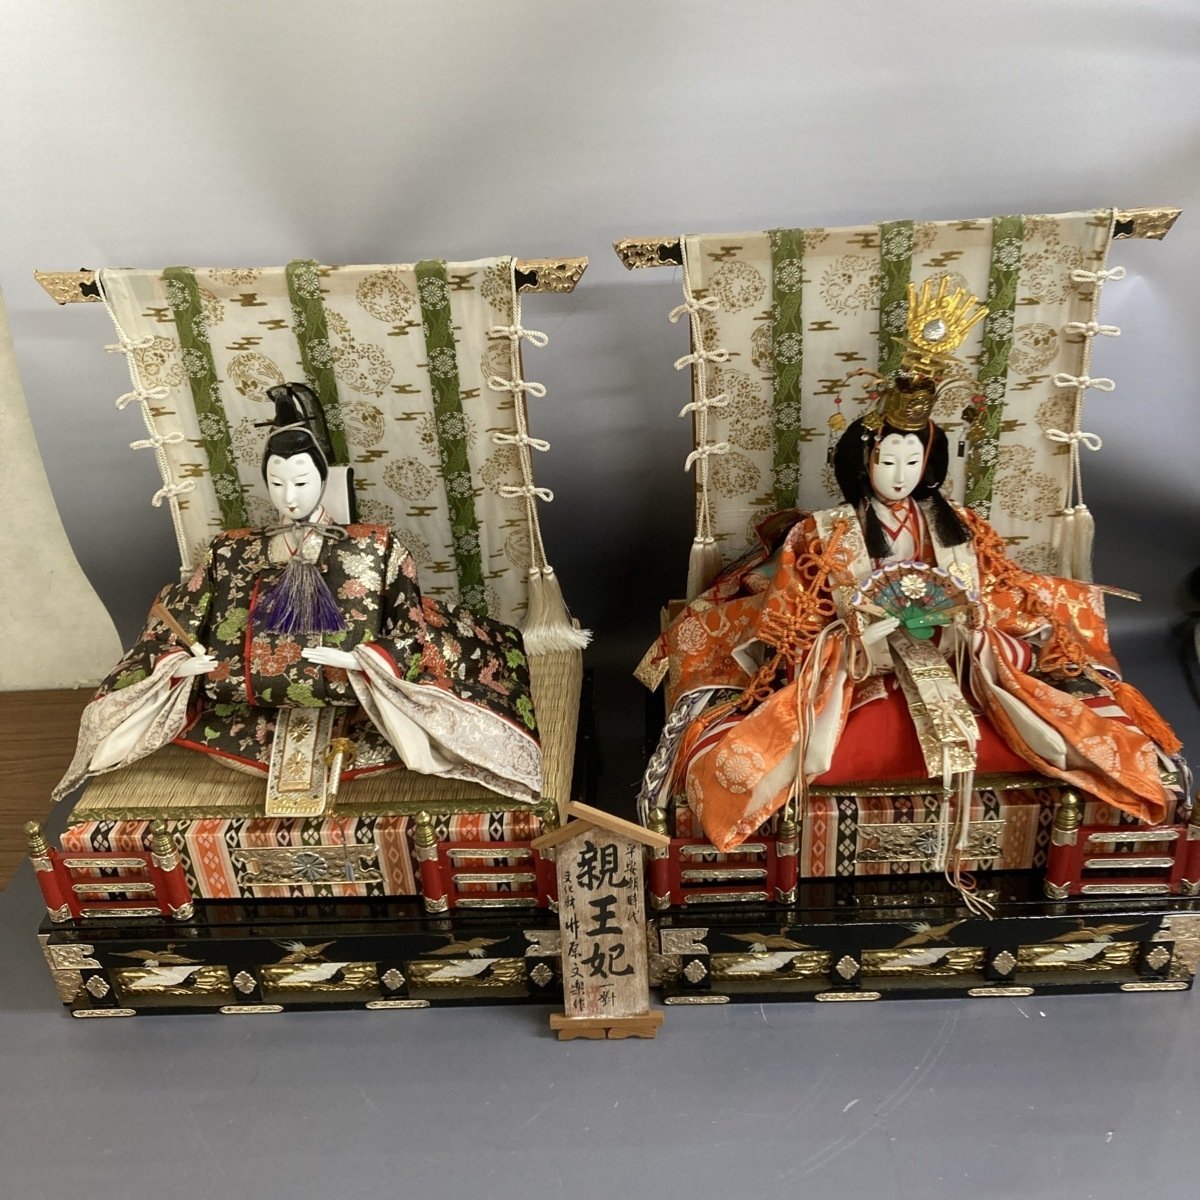 f001 F Solo recogida Obra de Takehara Bunraku Período Heian Príncipe y Princesa par de muñecas Hina, estación, Eventos anuales, festival de muñecas, muñecas hina